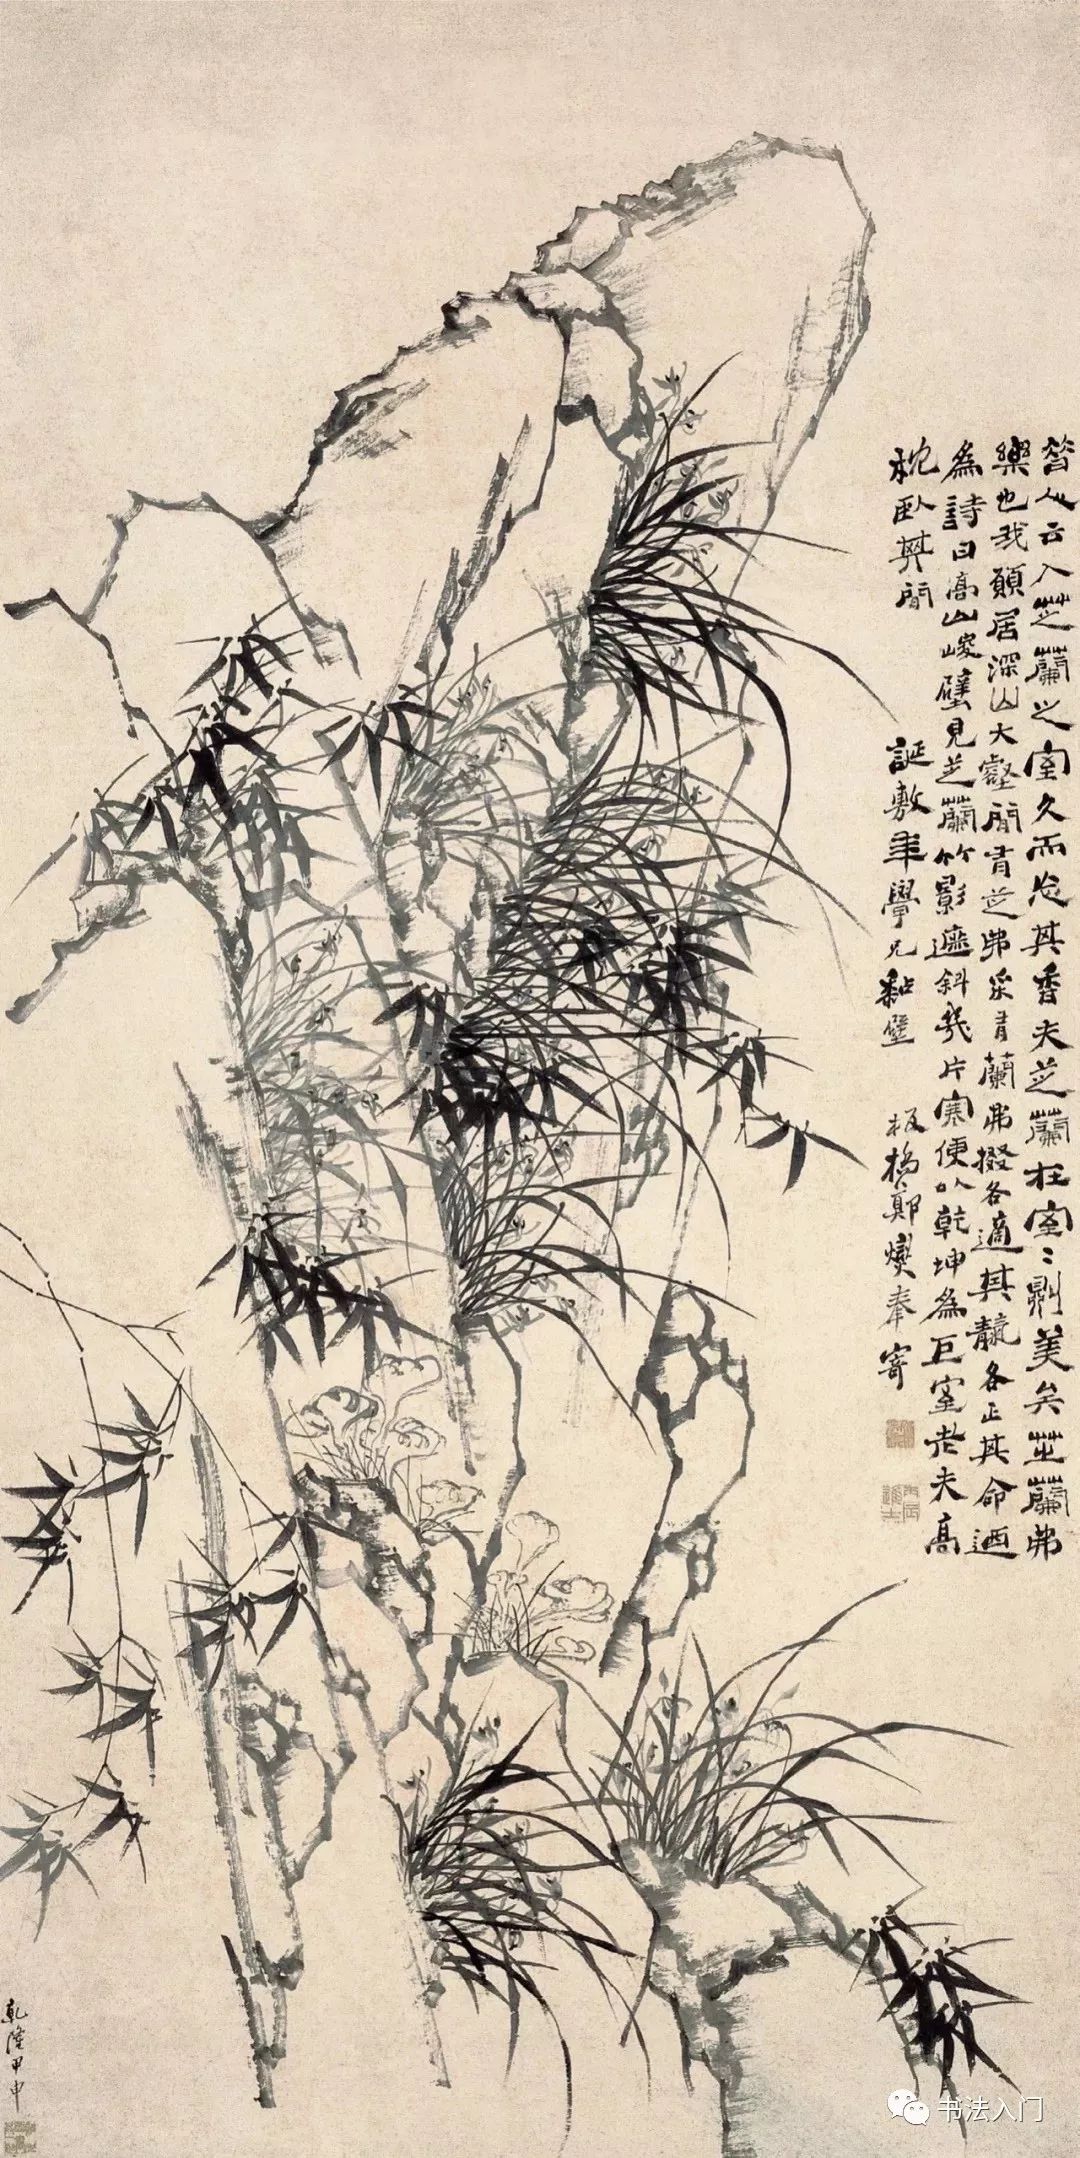 3cm×120cm 上海博物馆藏题画兰身在千山顶上头,突岩深缝妙香稠.